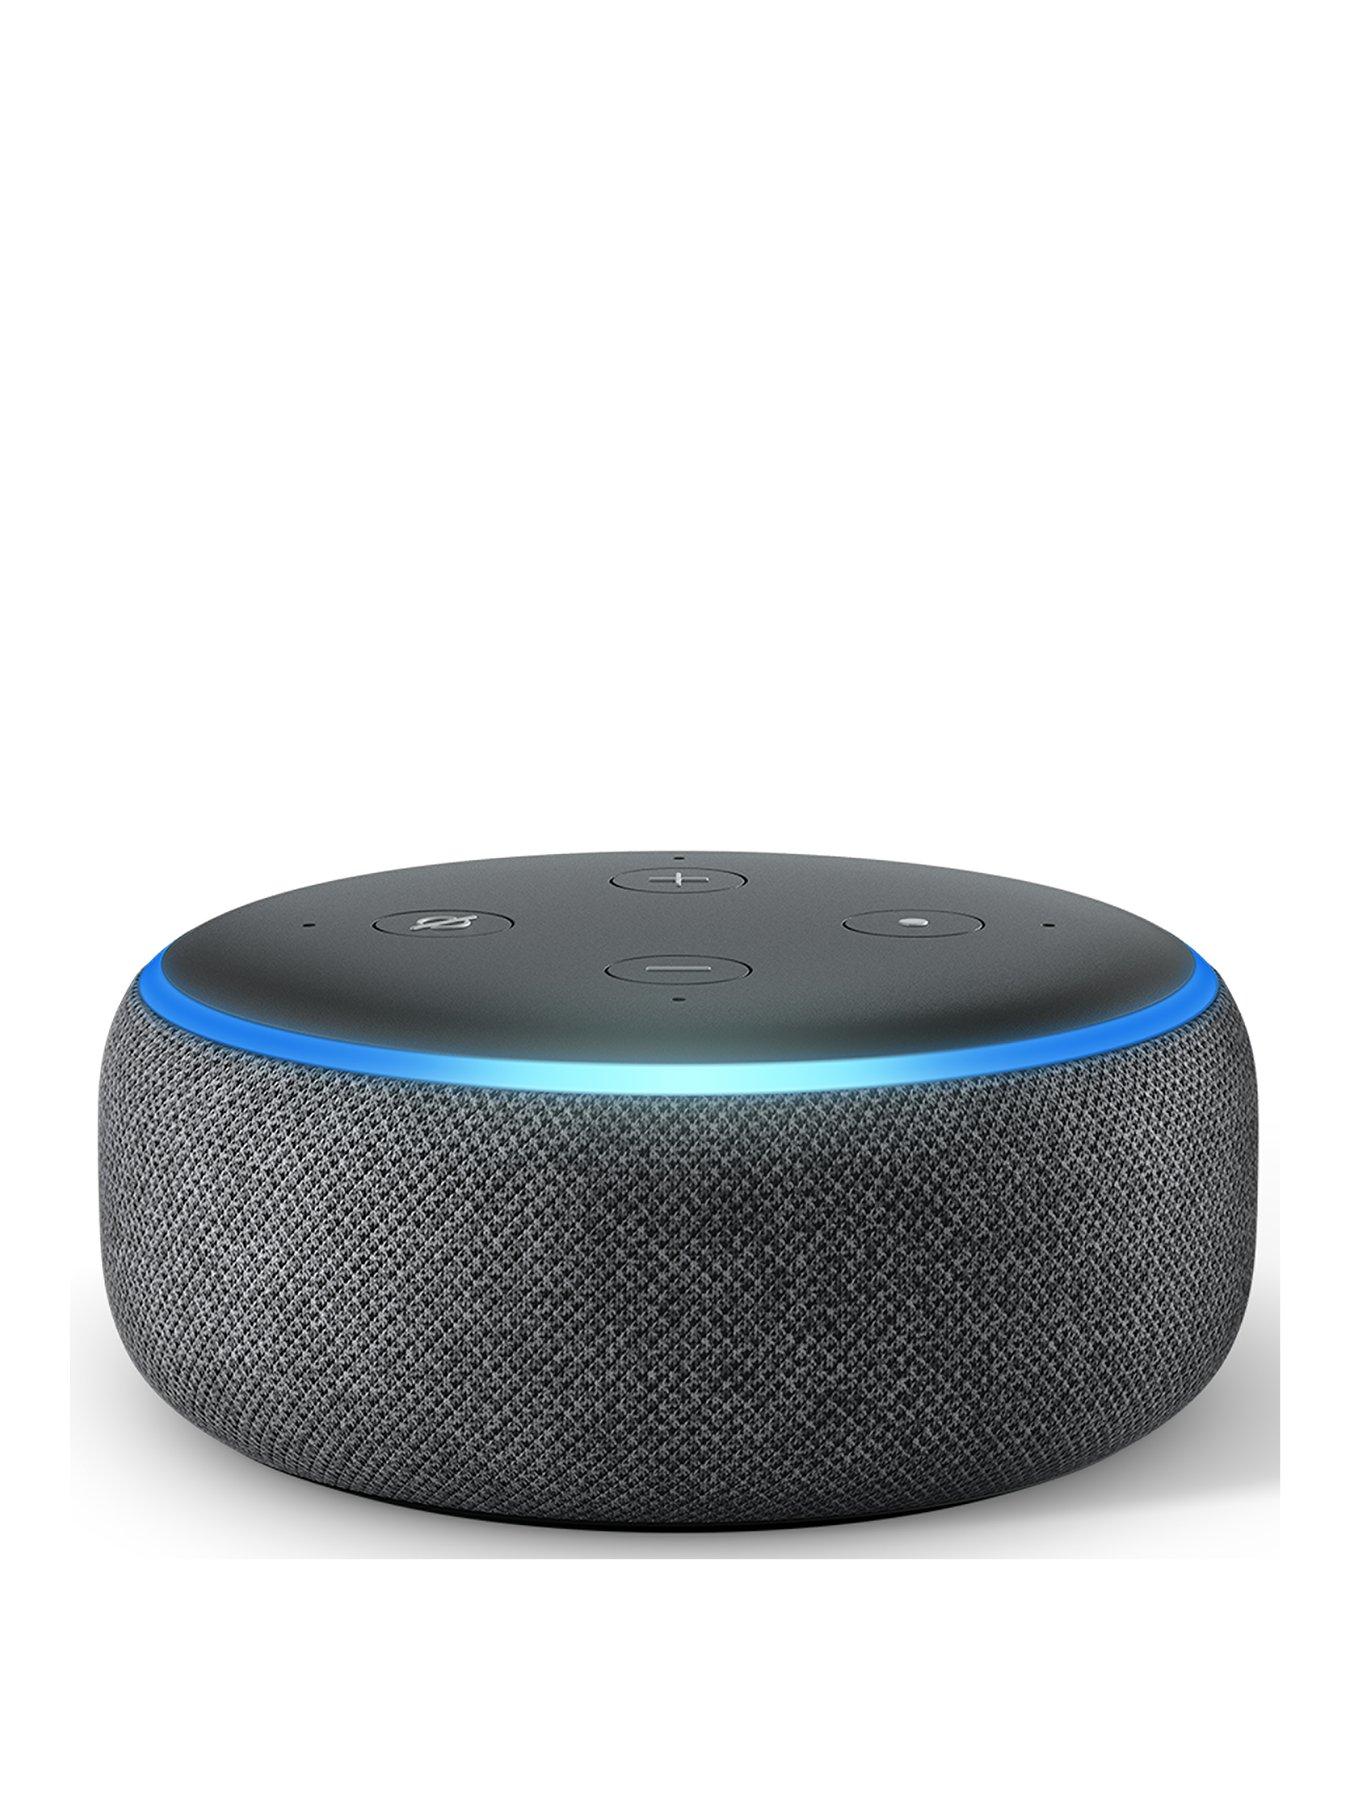 Amazon Echo Dot (3rd Gen) - Smart speaker with Alexa, Built with privacy controls Very Ireland